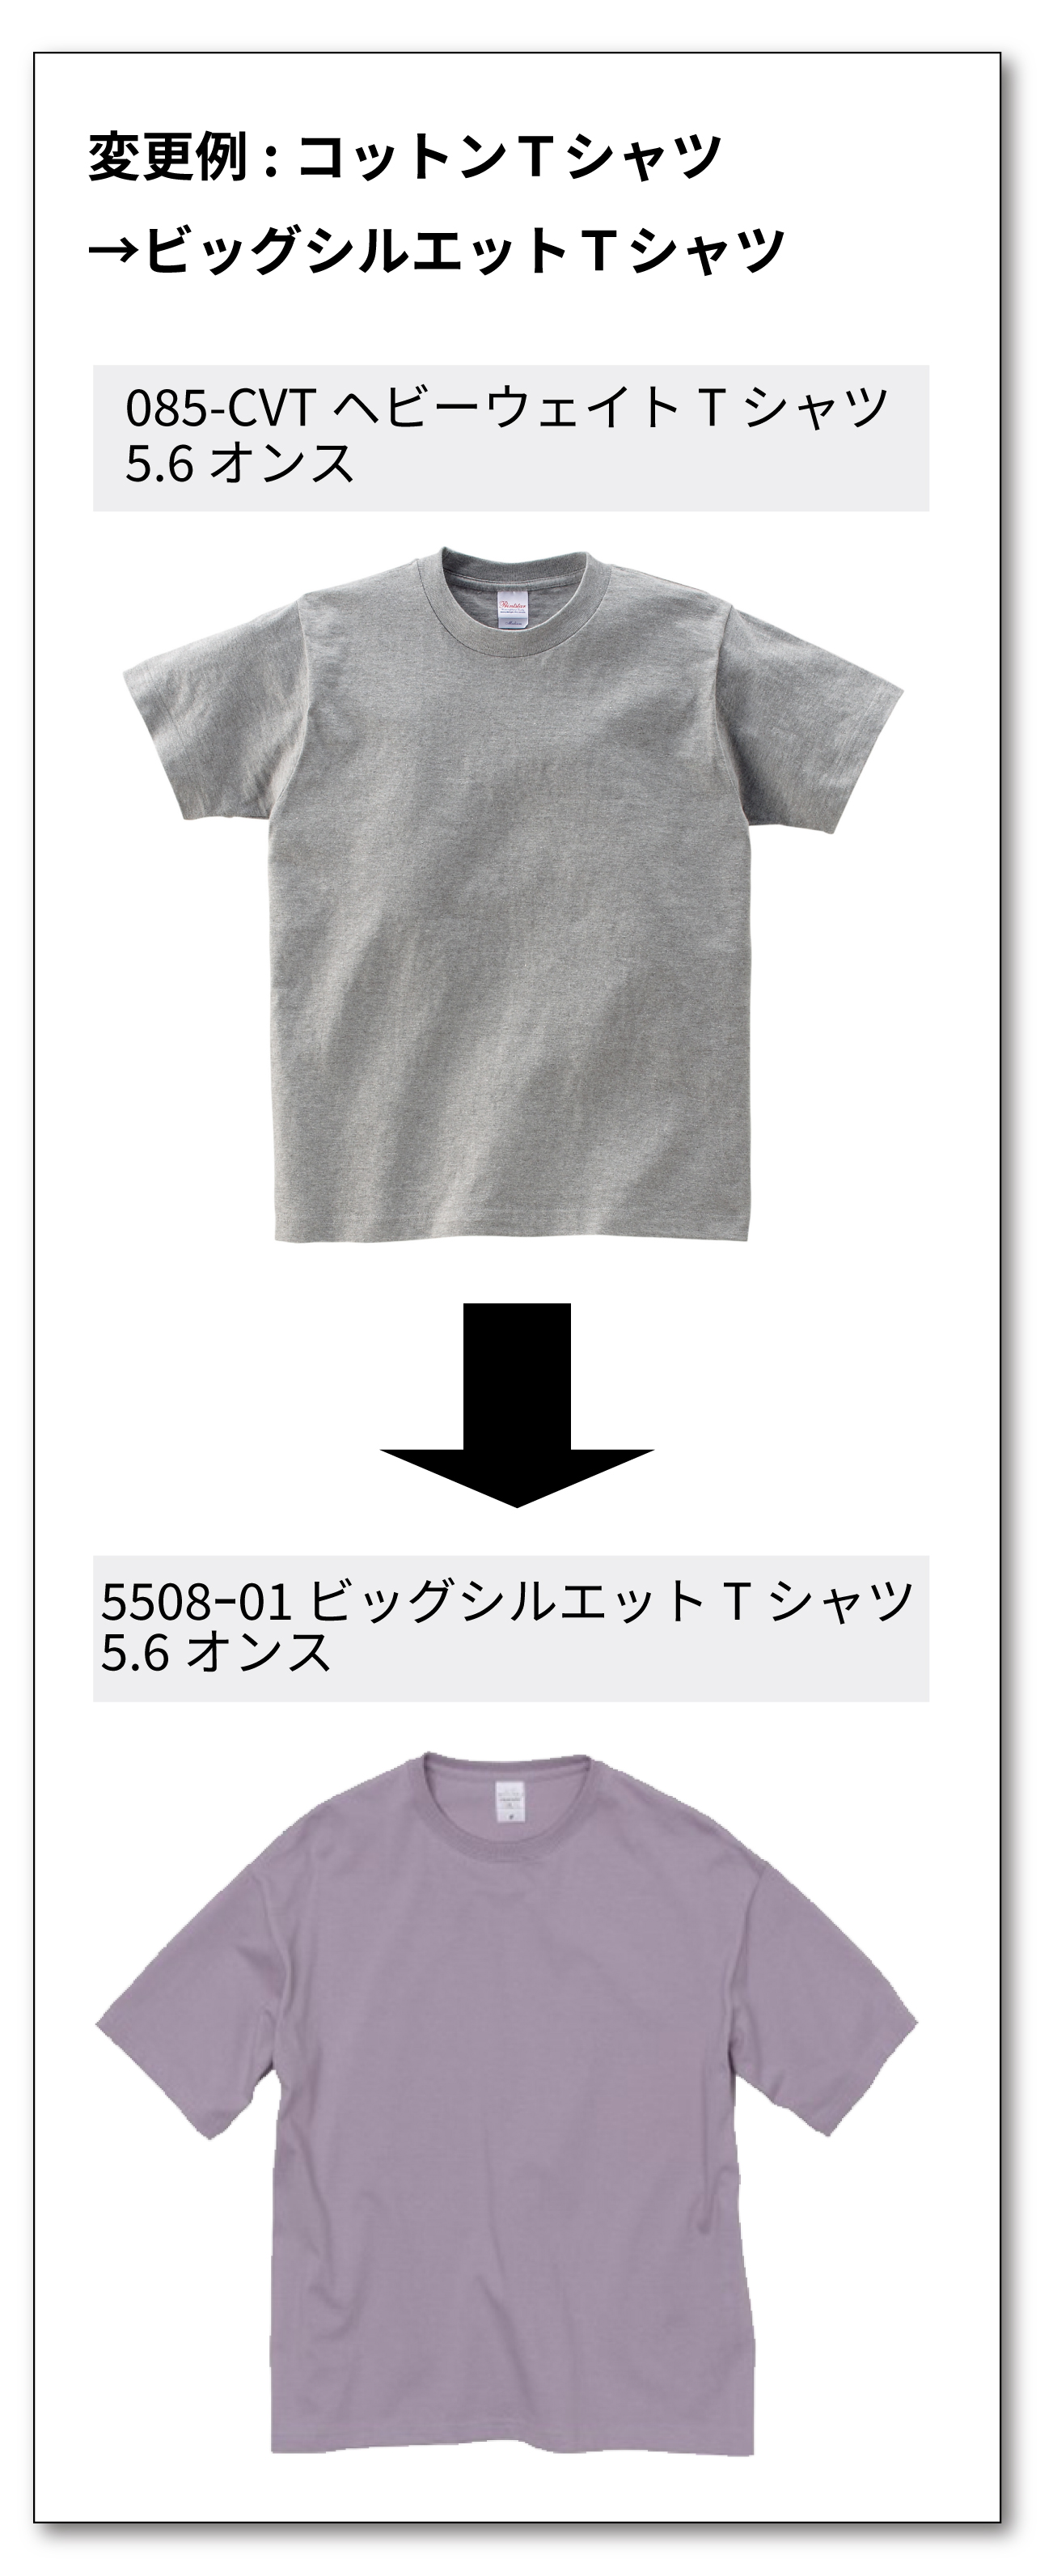 Tシャツ商品乗り換えキャンペーン参考例２モバイル